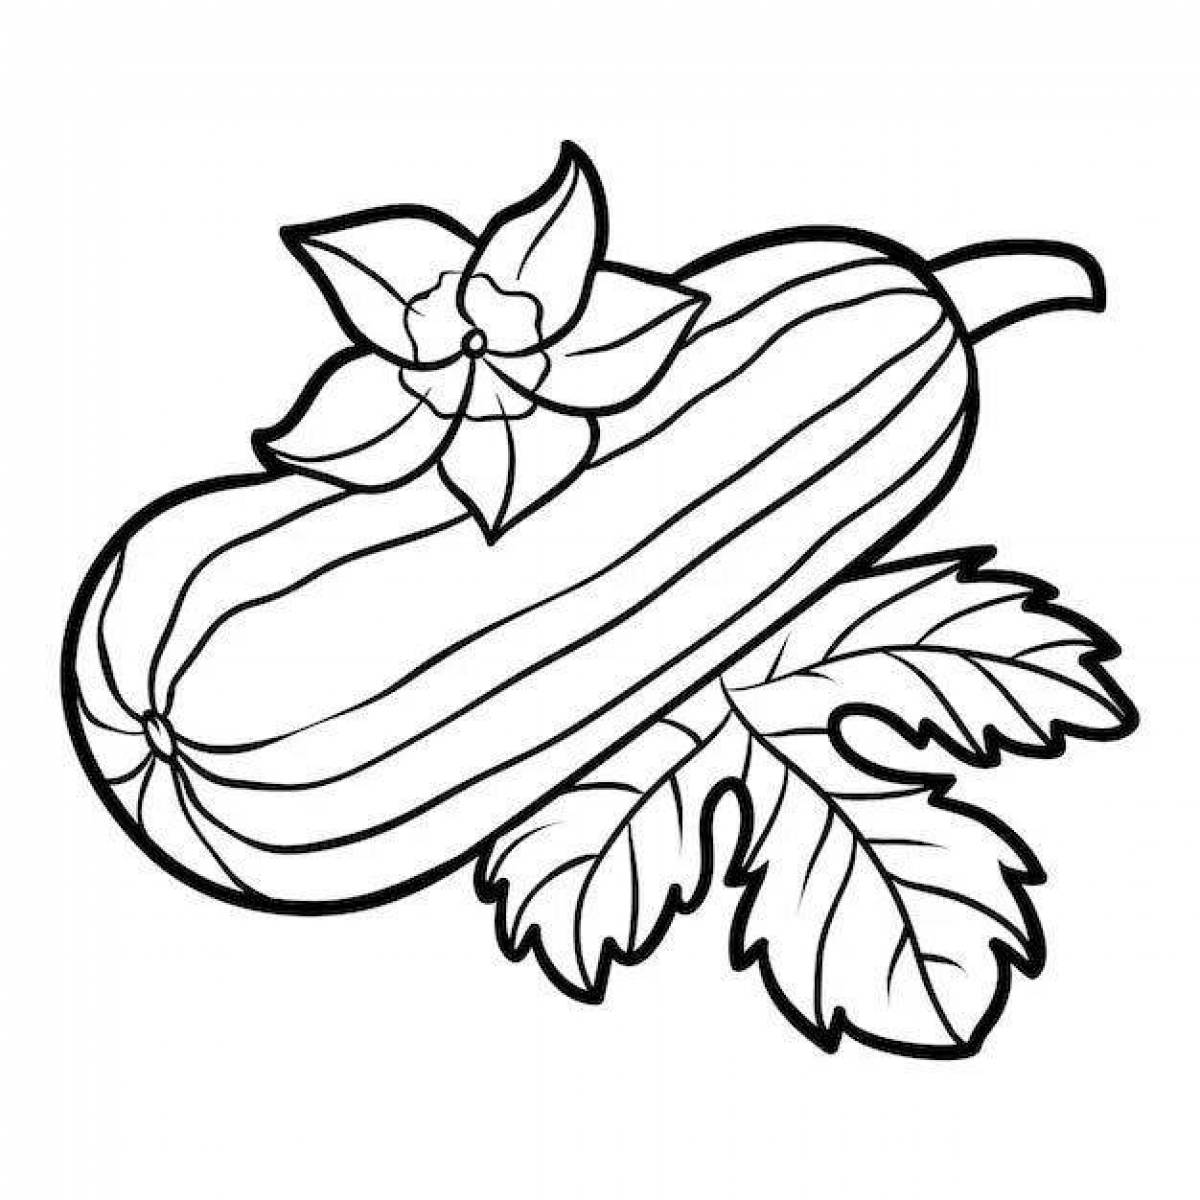 Zucchini live coloring page